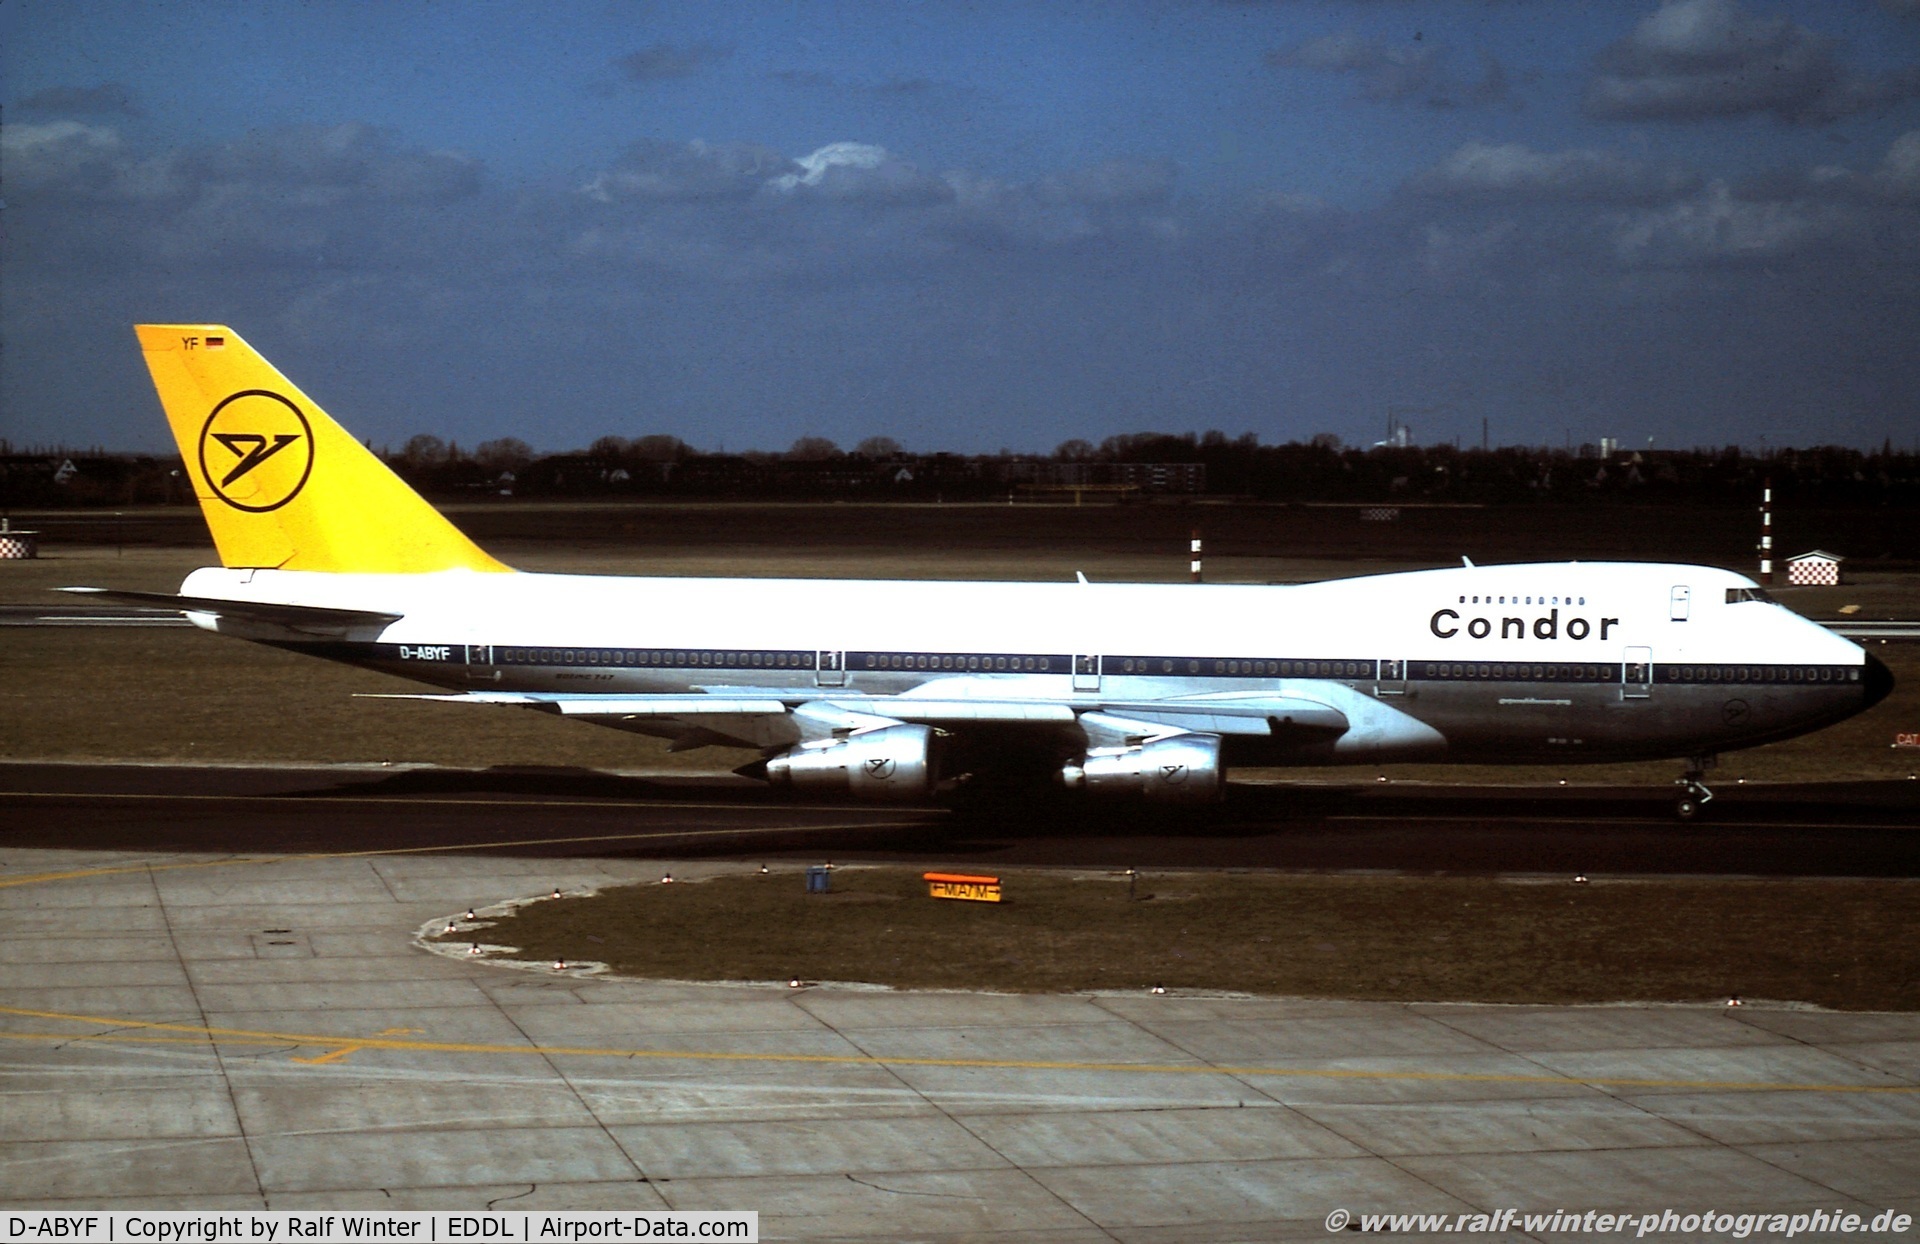 D-ABYF, 1971 Boeing 747-230B C/N 20493, Boing 747-230B - DF DF Condor - 20493 - D-ABYF - 1979 - DUS